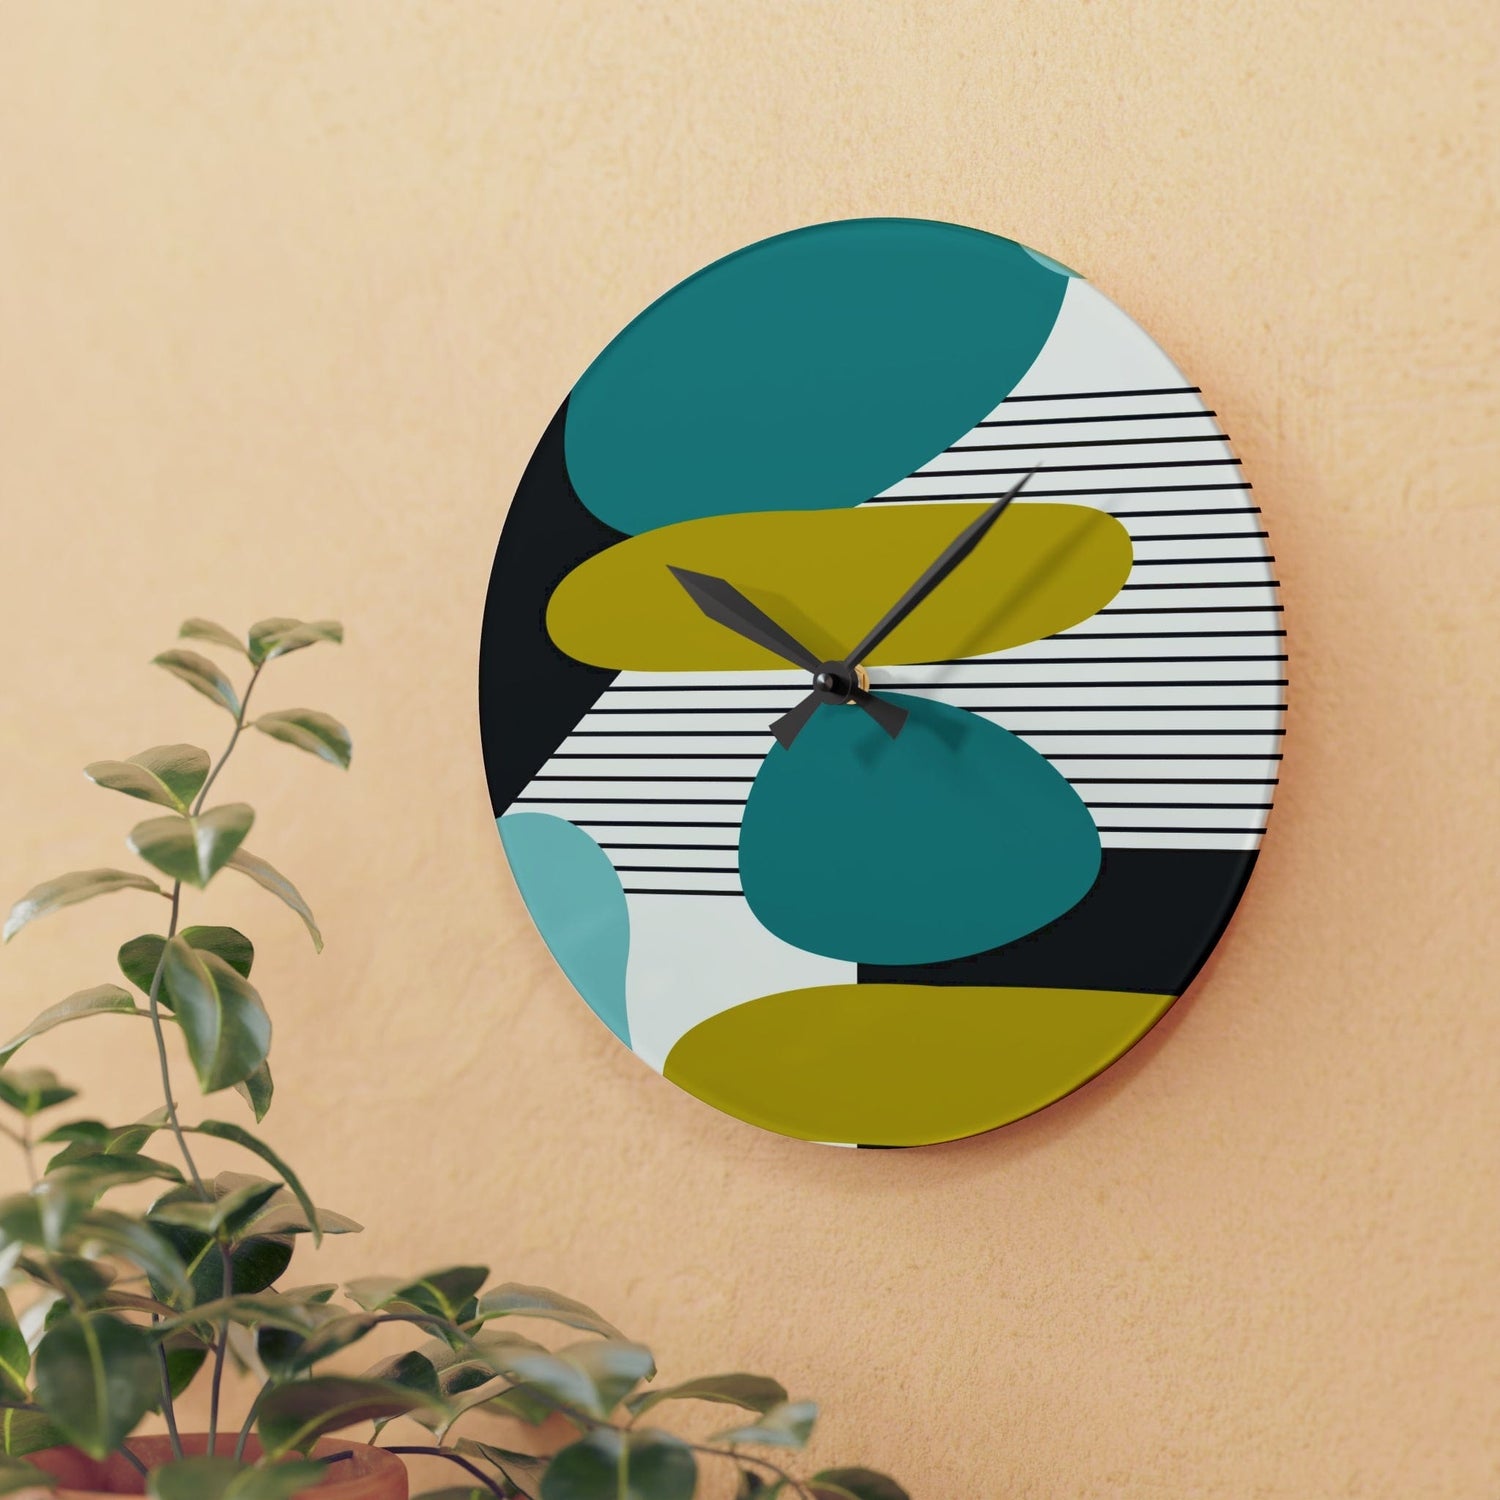 Mid Century Modern, Minimalist Geometric Green, Teal, Black Abstract Acrylic Wall Clock Home Decor